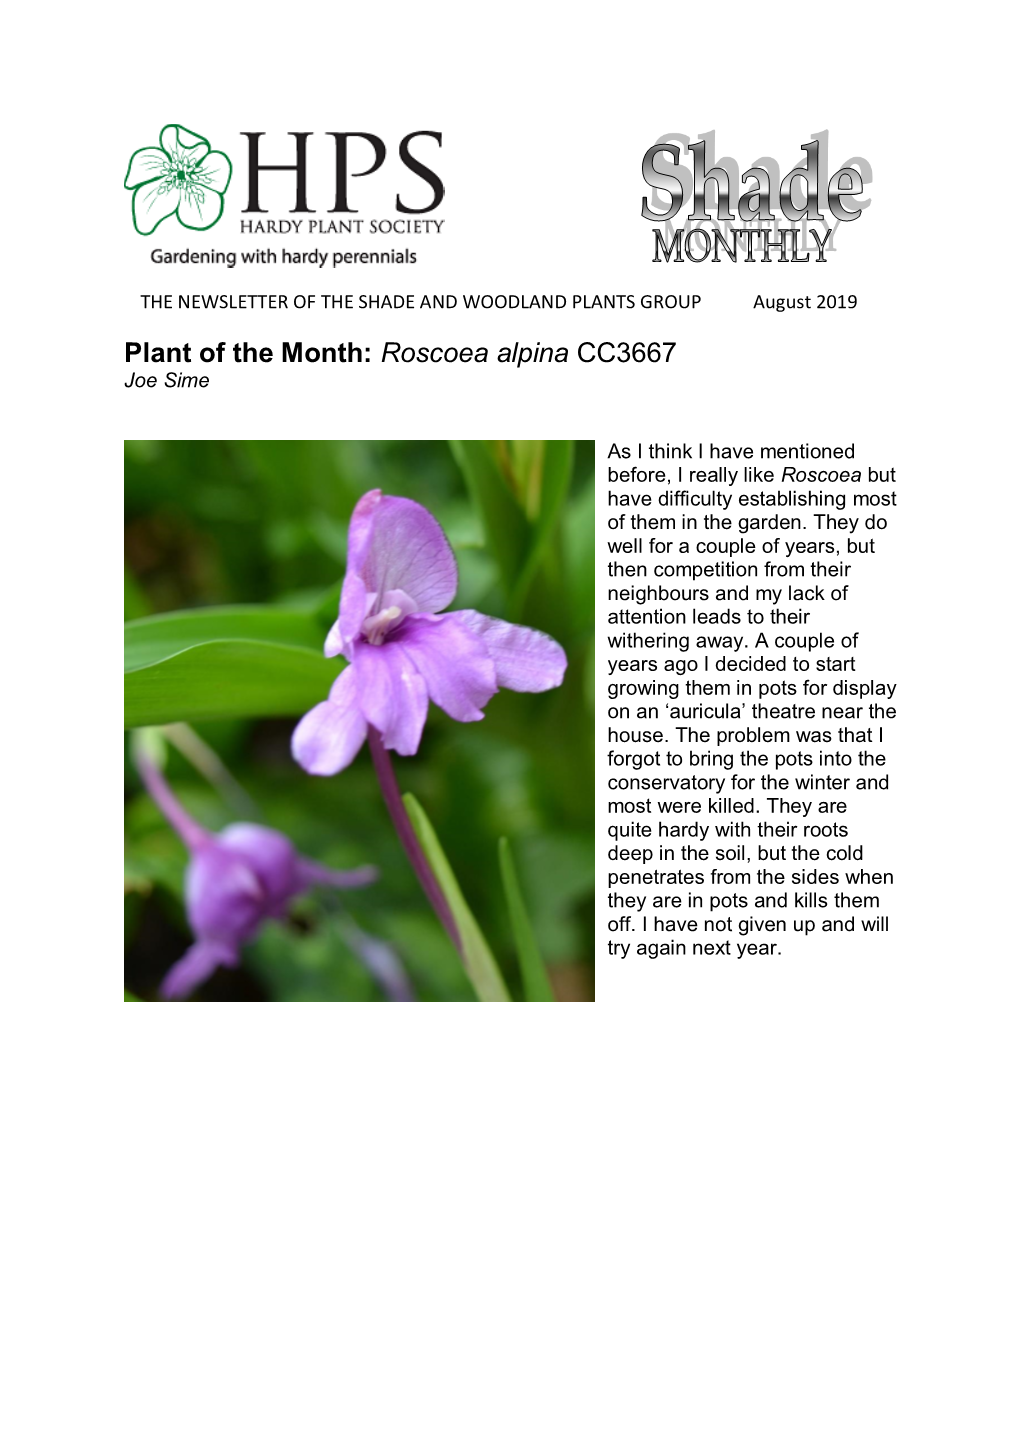 Plant of the Month: Roscoea Alpina CC3667 Joe Sime